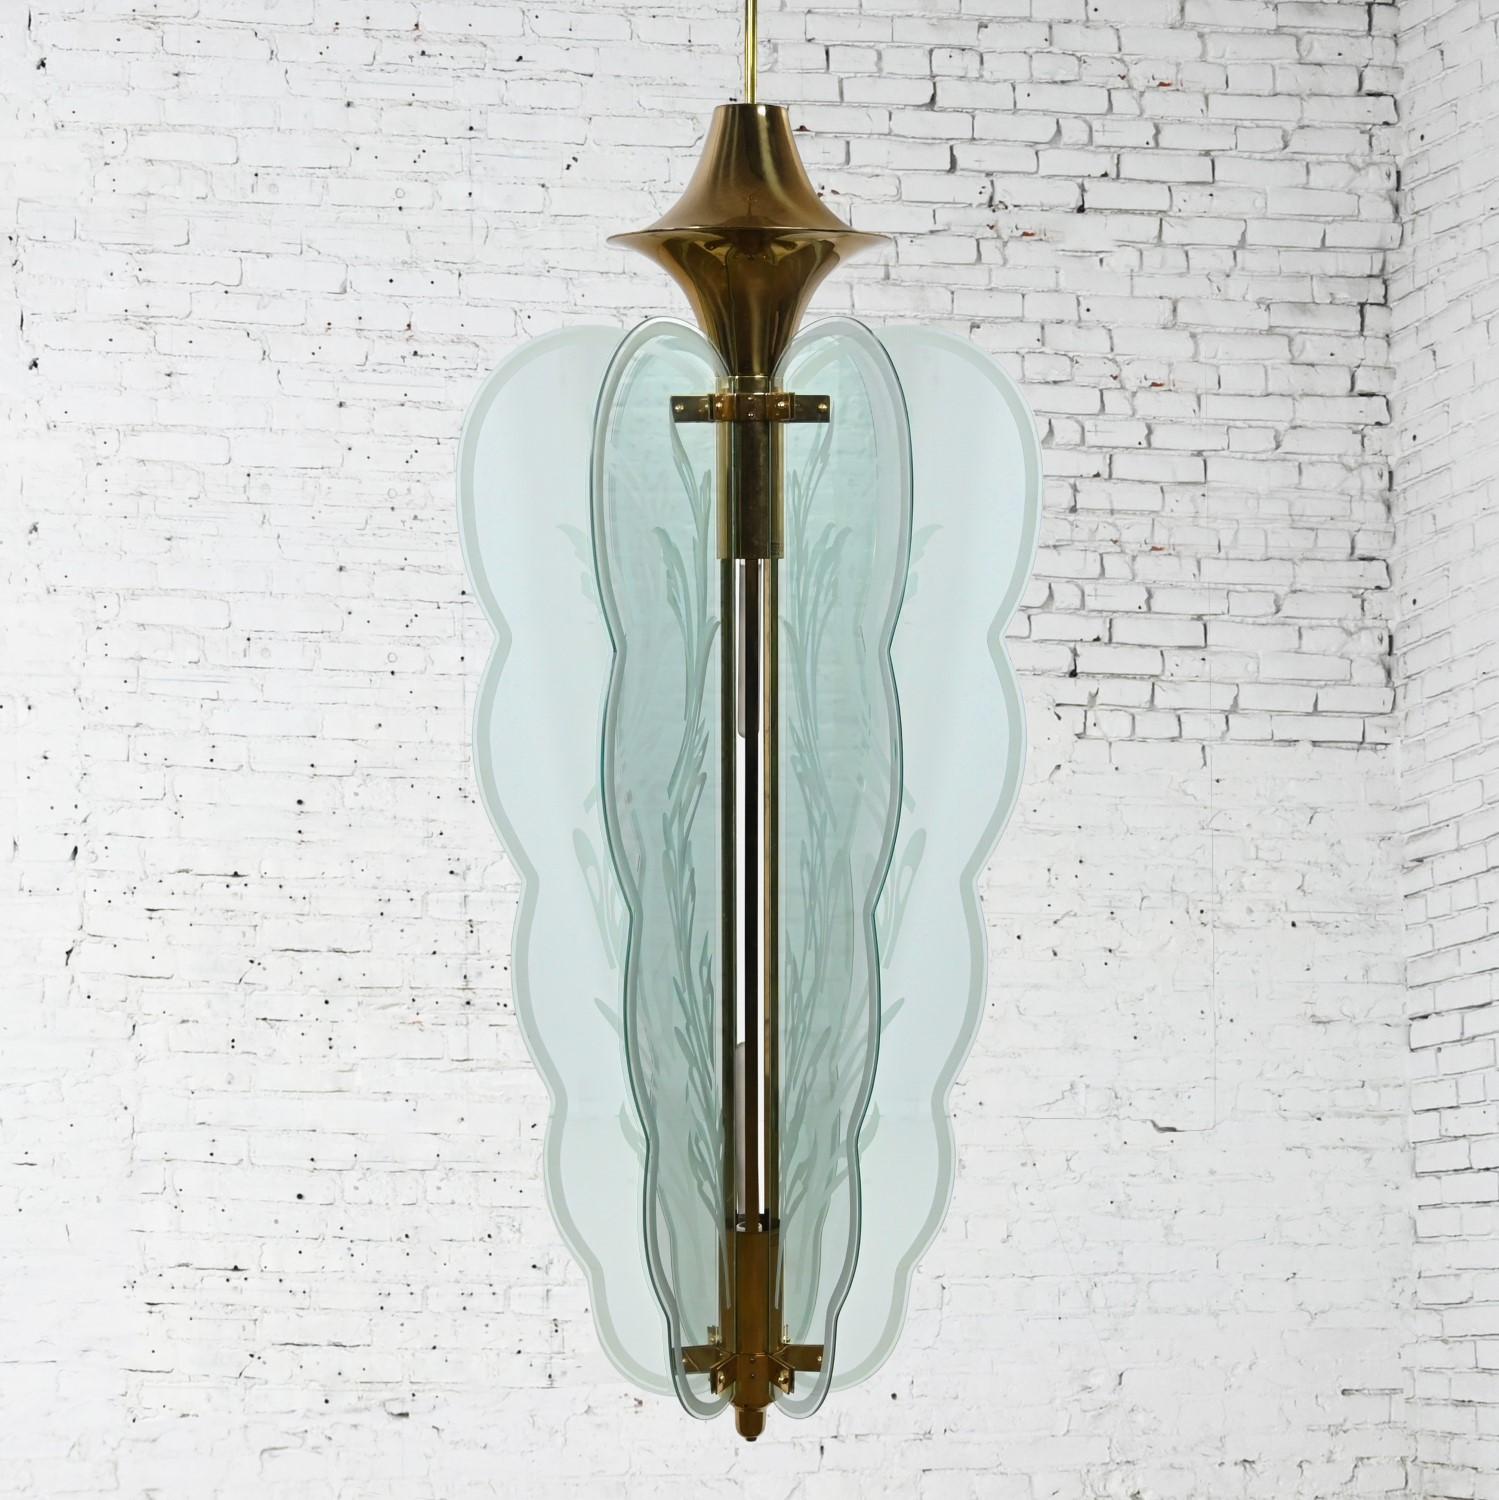 Art Deco Revival Monumental Brass Etched Glass Hanging Light Fixture Chandelier For Sale 6